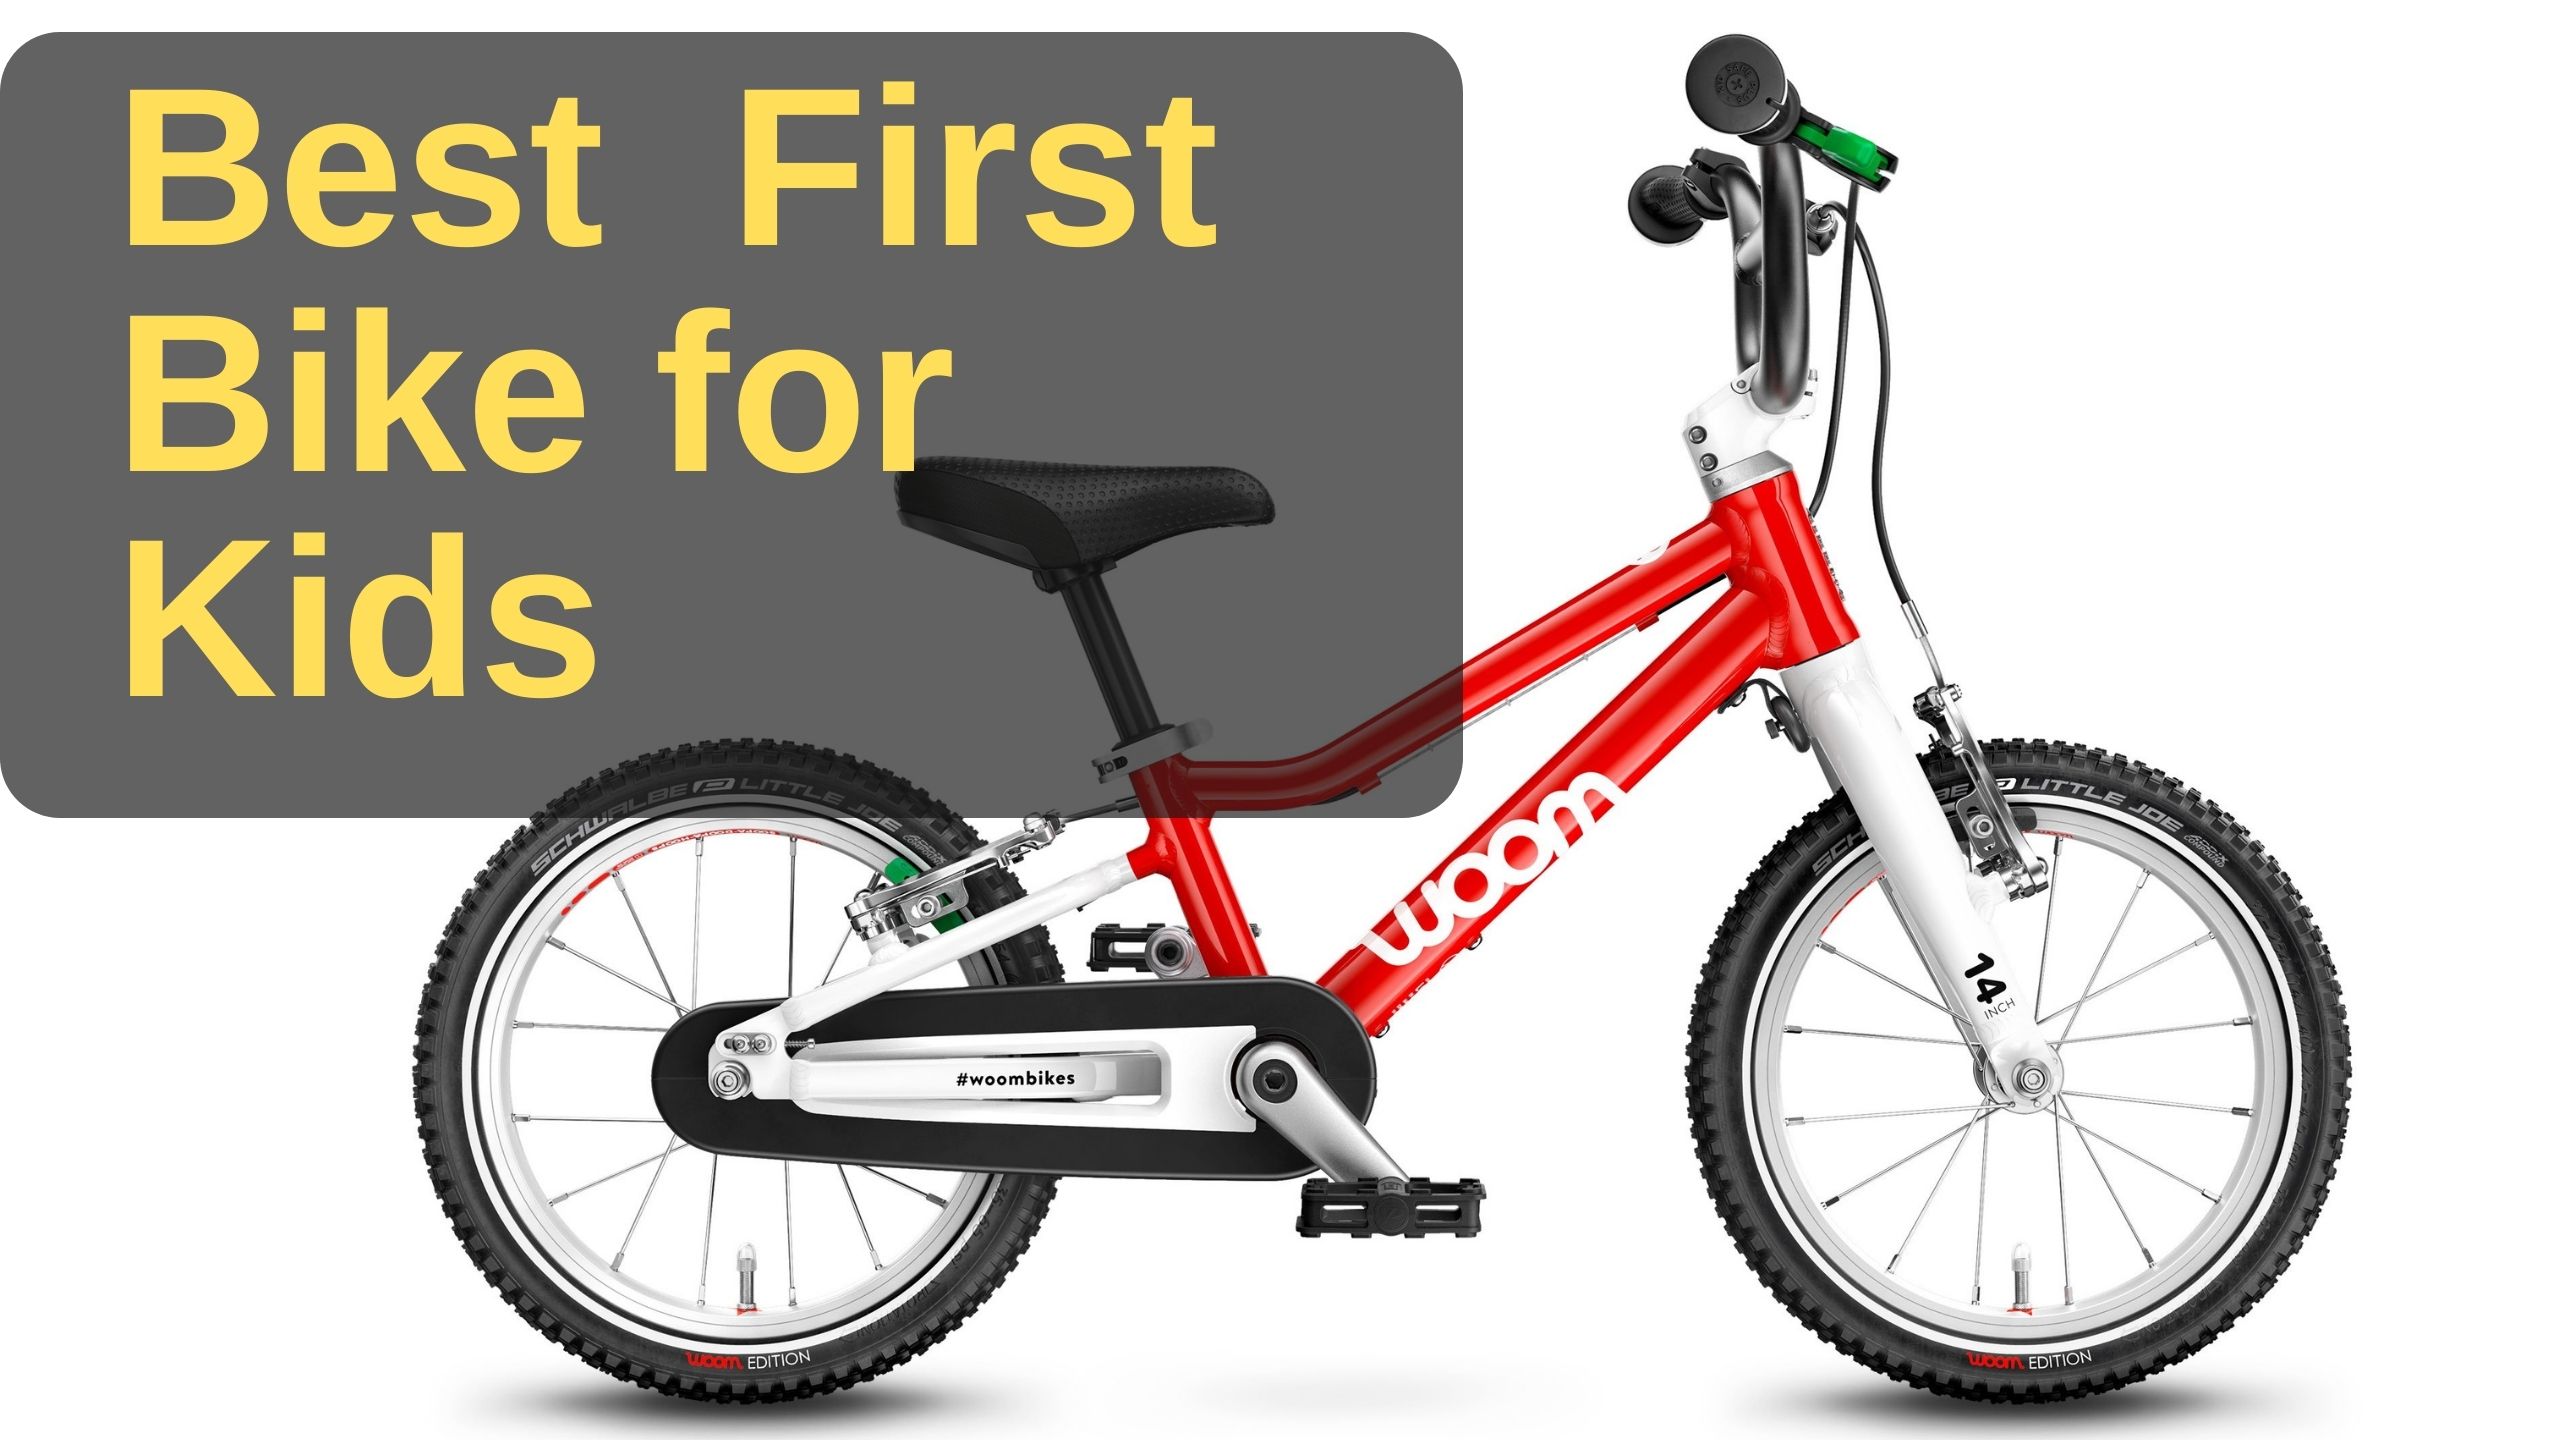 Best First Bike for Kids